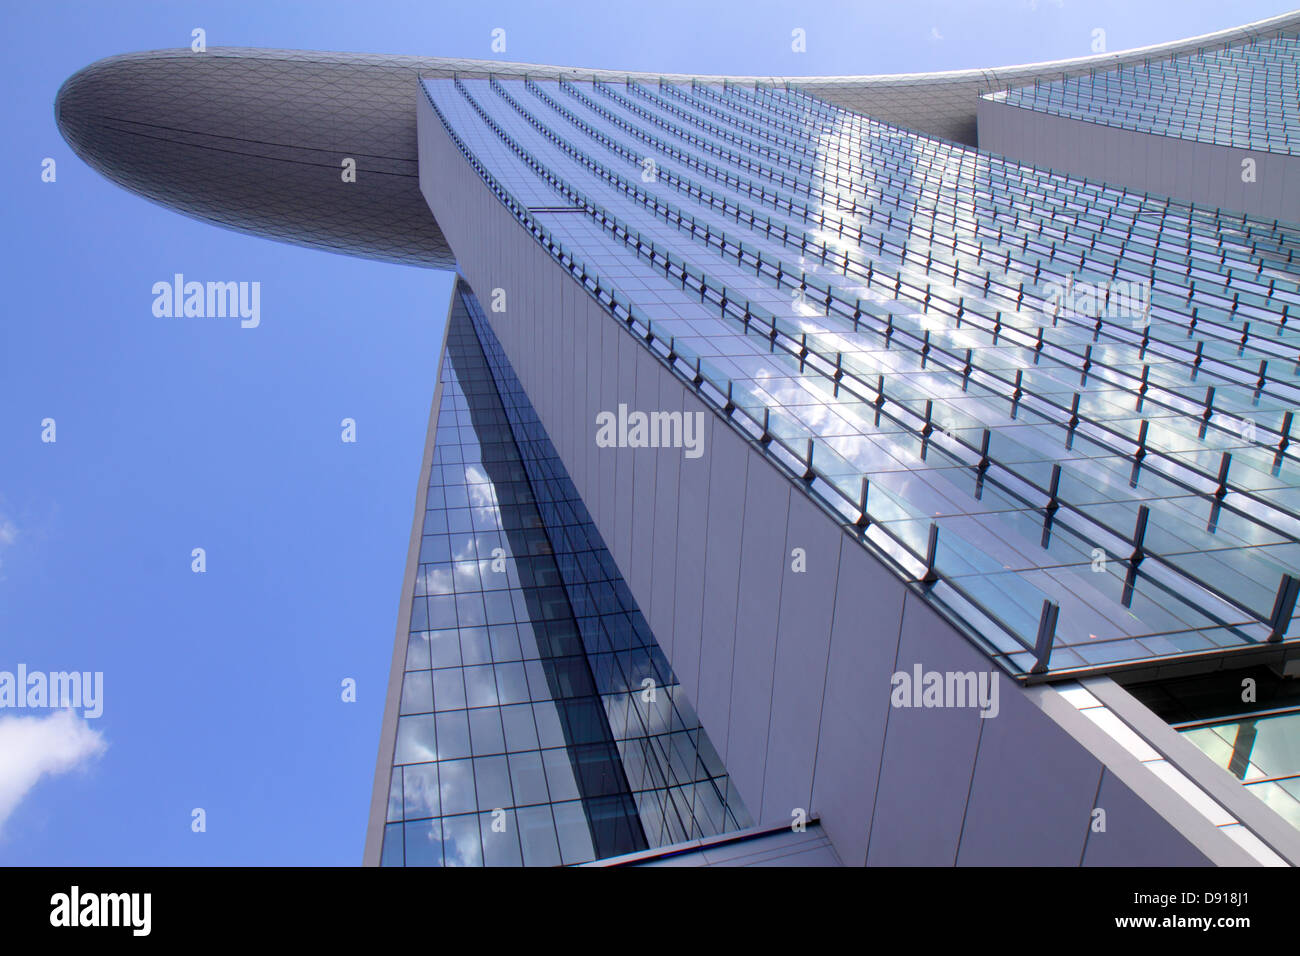 Singapore Marina Bay Sands,hotel,high-rise,skyscraper,Skywalk,design,architecture Sing130202149 Stock Photo